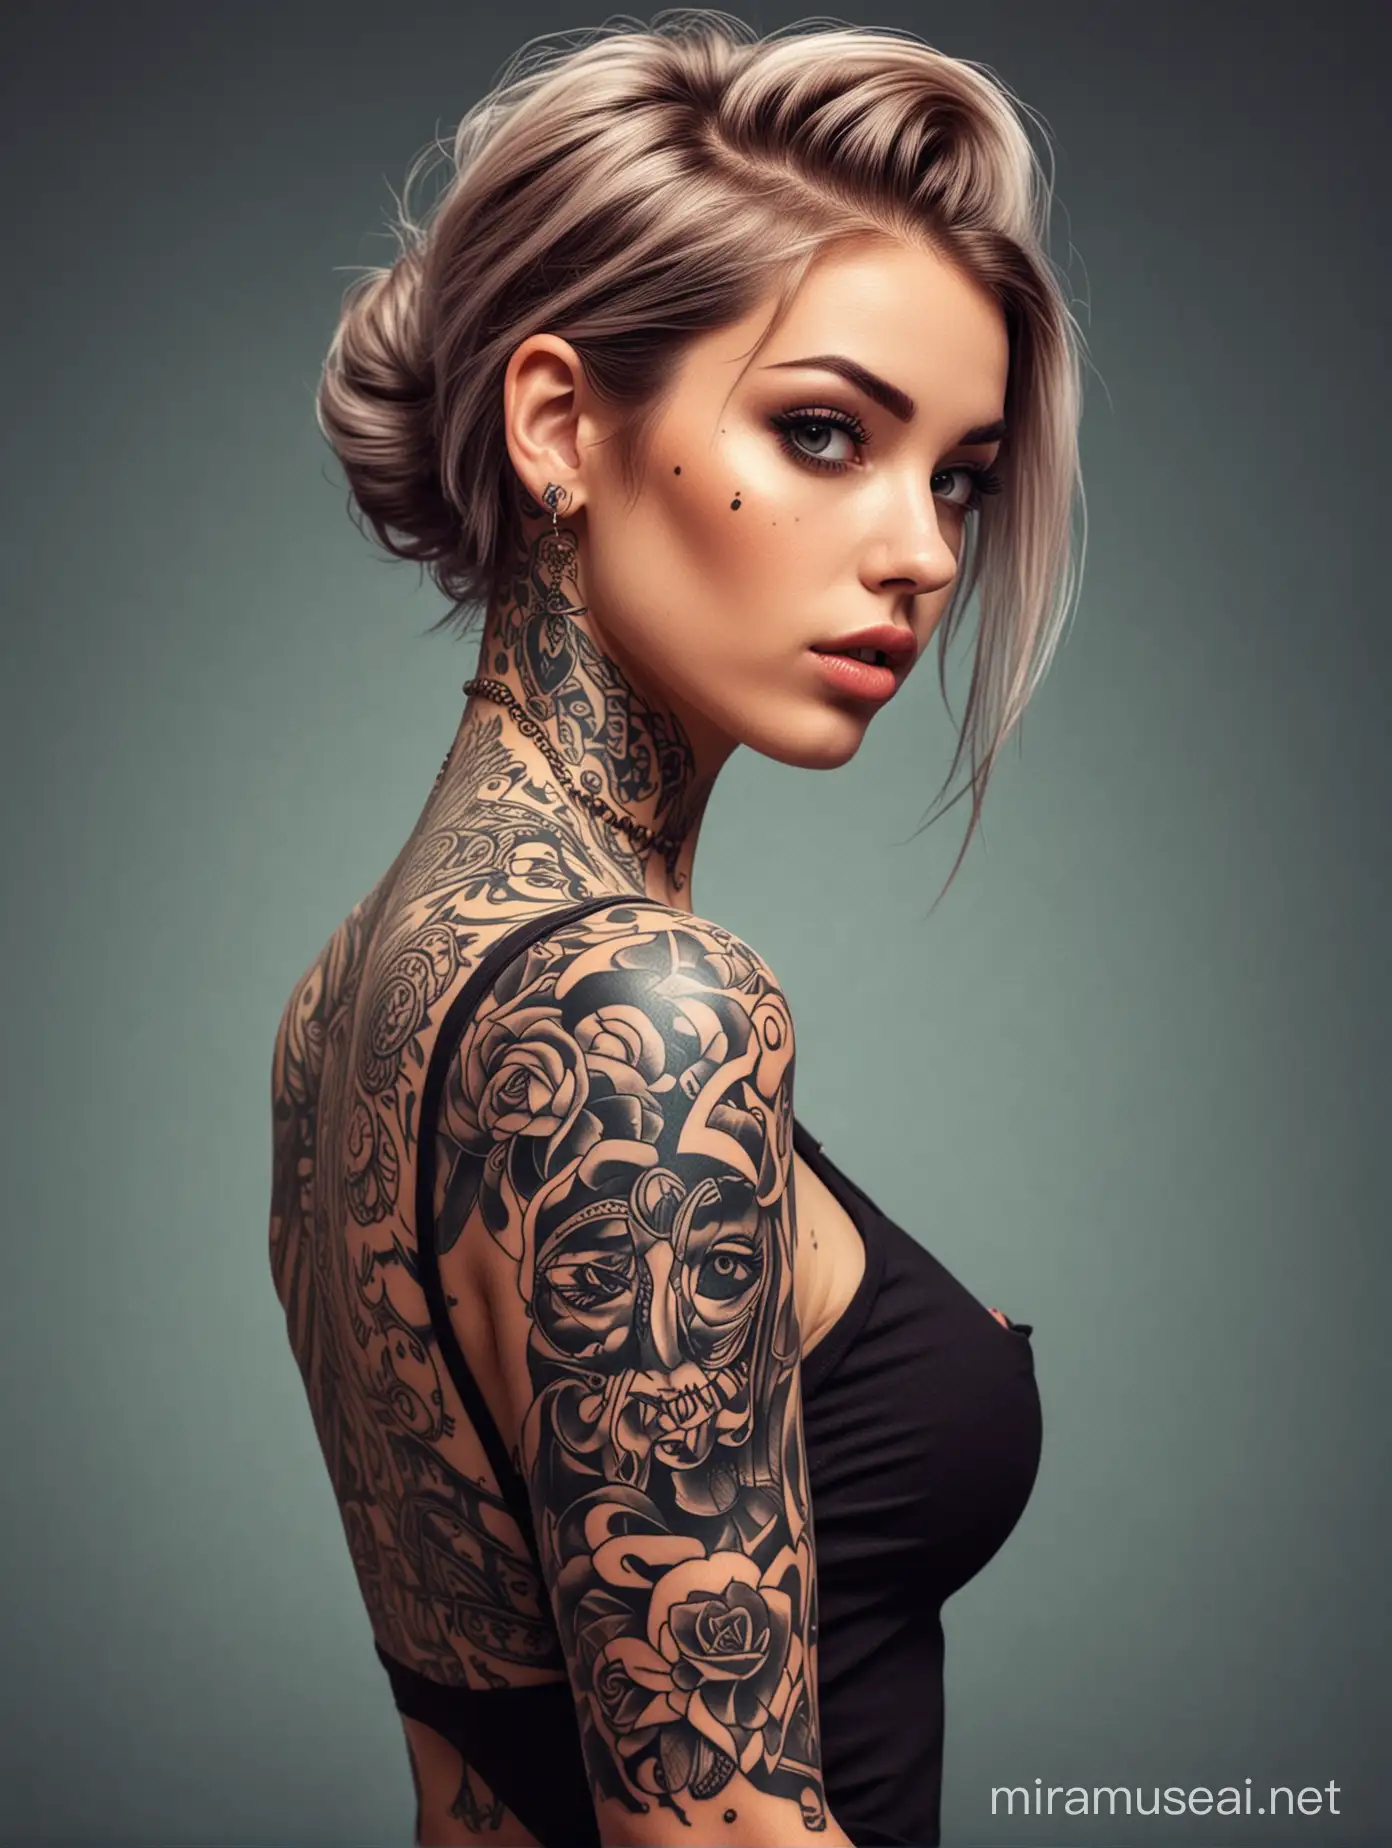 Stylish Tattooed Lady in Comic Style Artwork